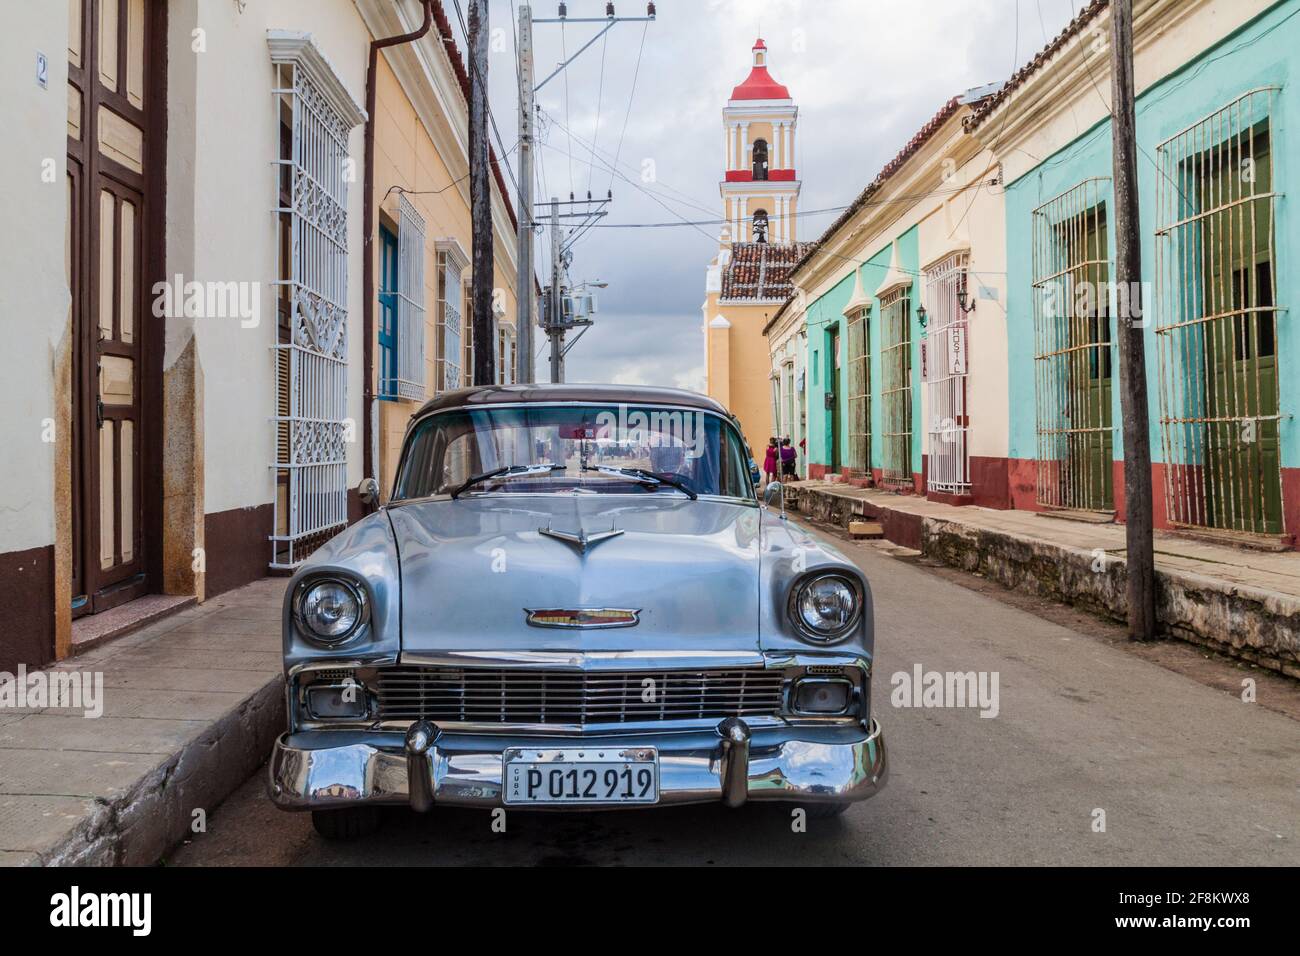 REMEDIOS, CUBA - FEB 12, 2016: Vintage Chevrolet car in Remedios town, Cuba Stock Photo